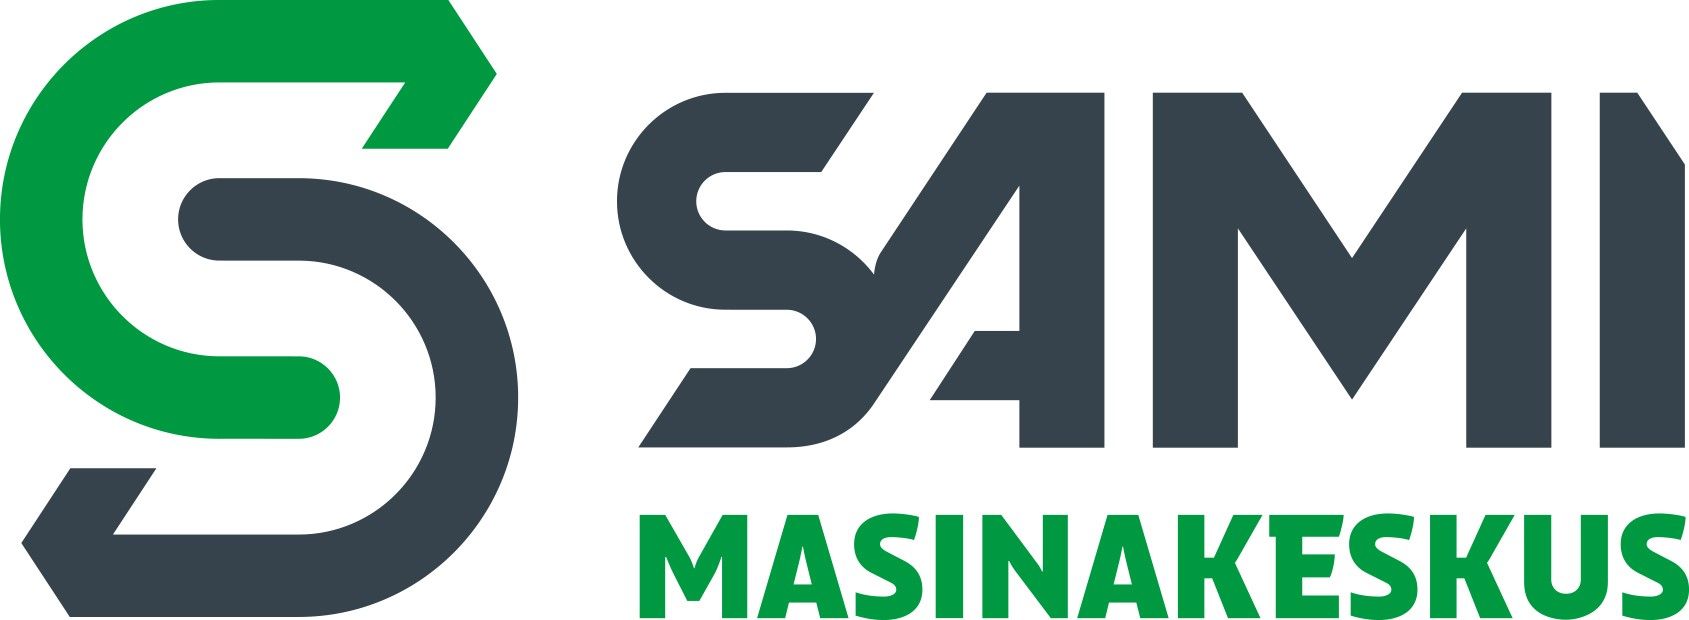 smk logo.jpg